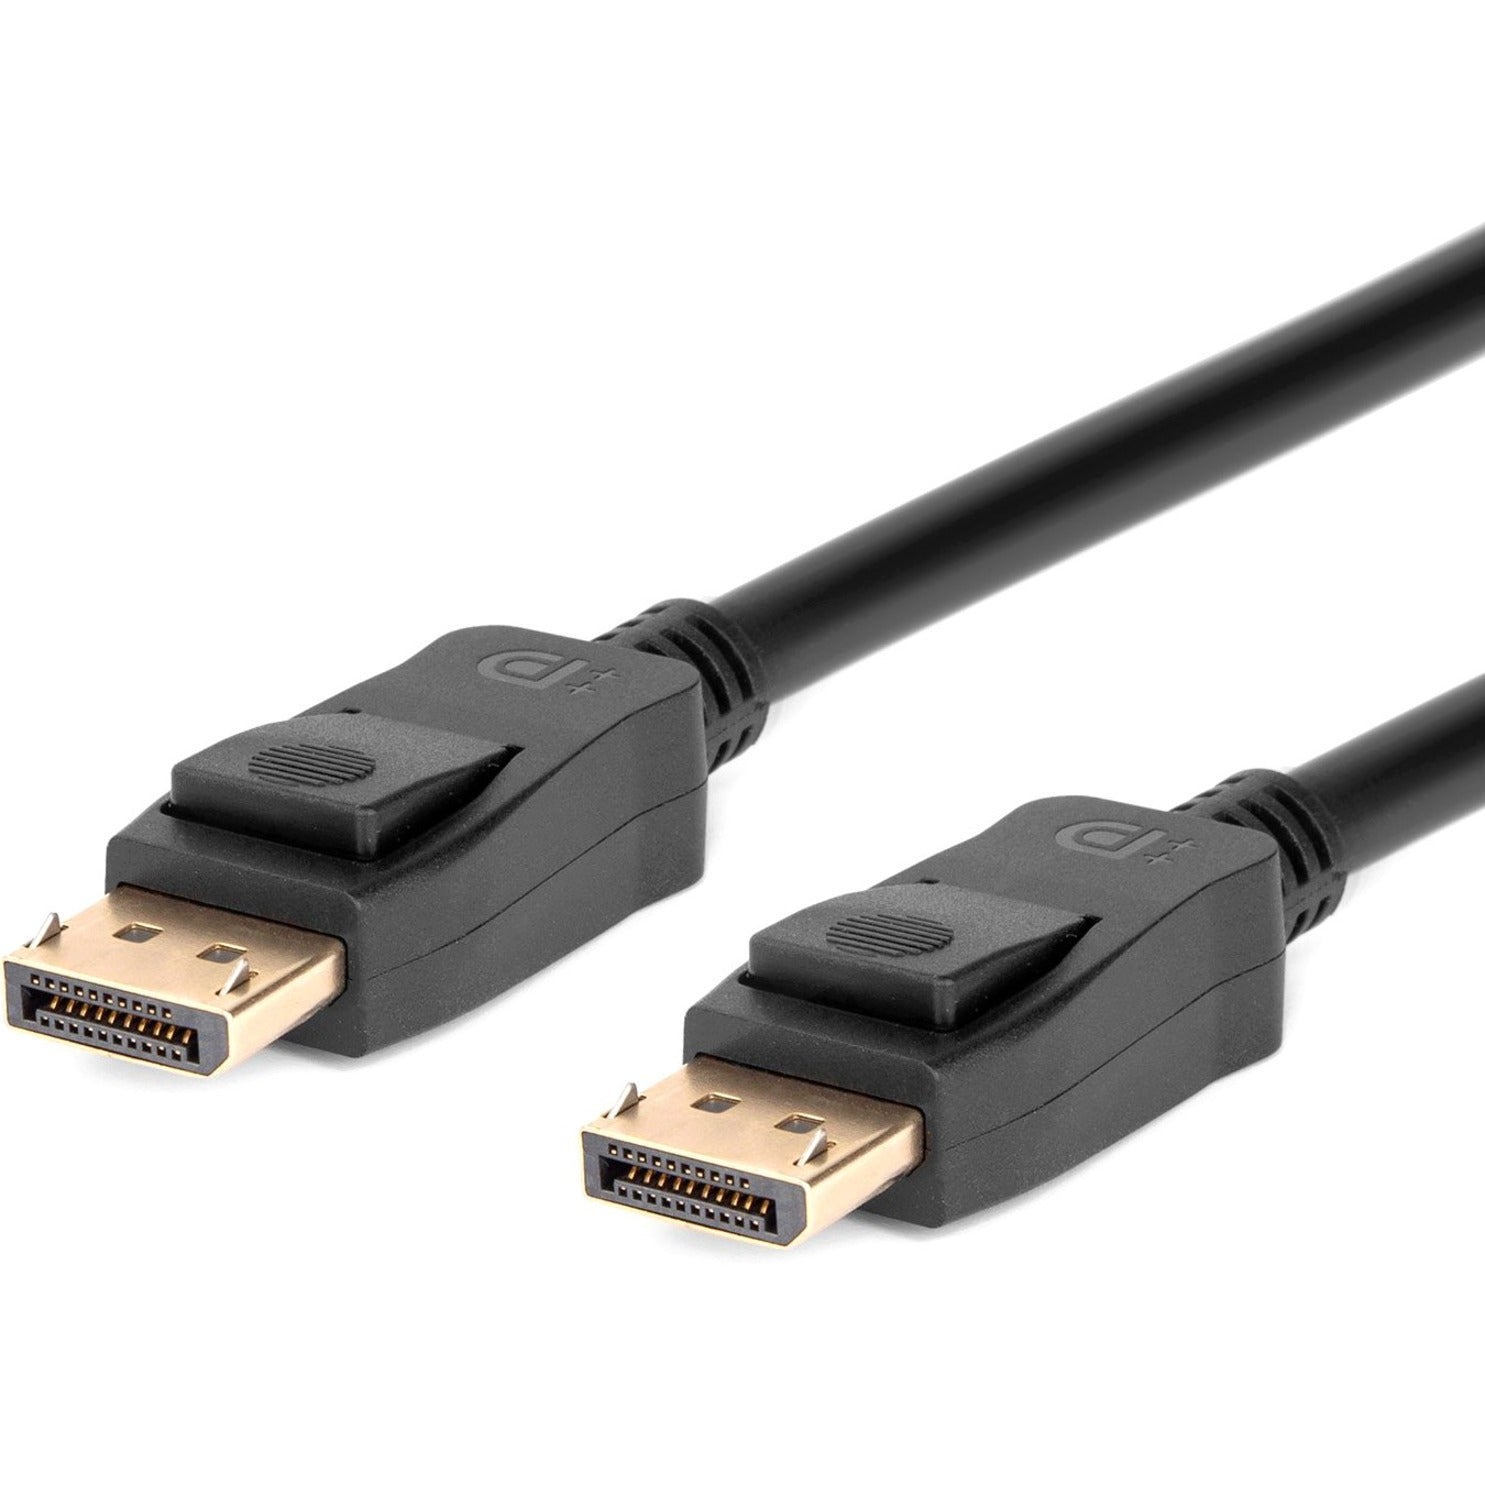 Rocstor Y10C269-B1 Premium DisplayPort 1.4 Cable - 8K/60Hz, HDR Support, HDCP 2.2, EMI Protection, 10 ft